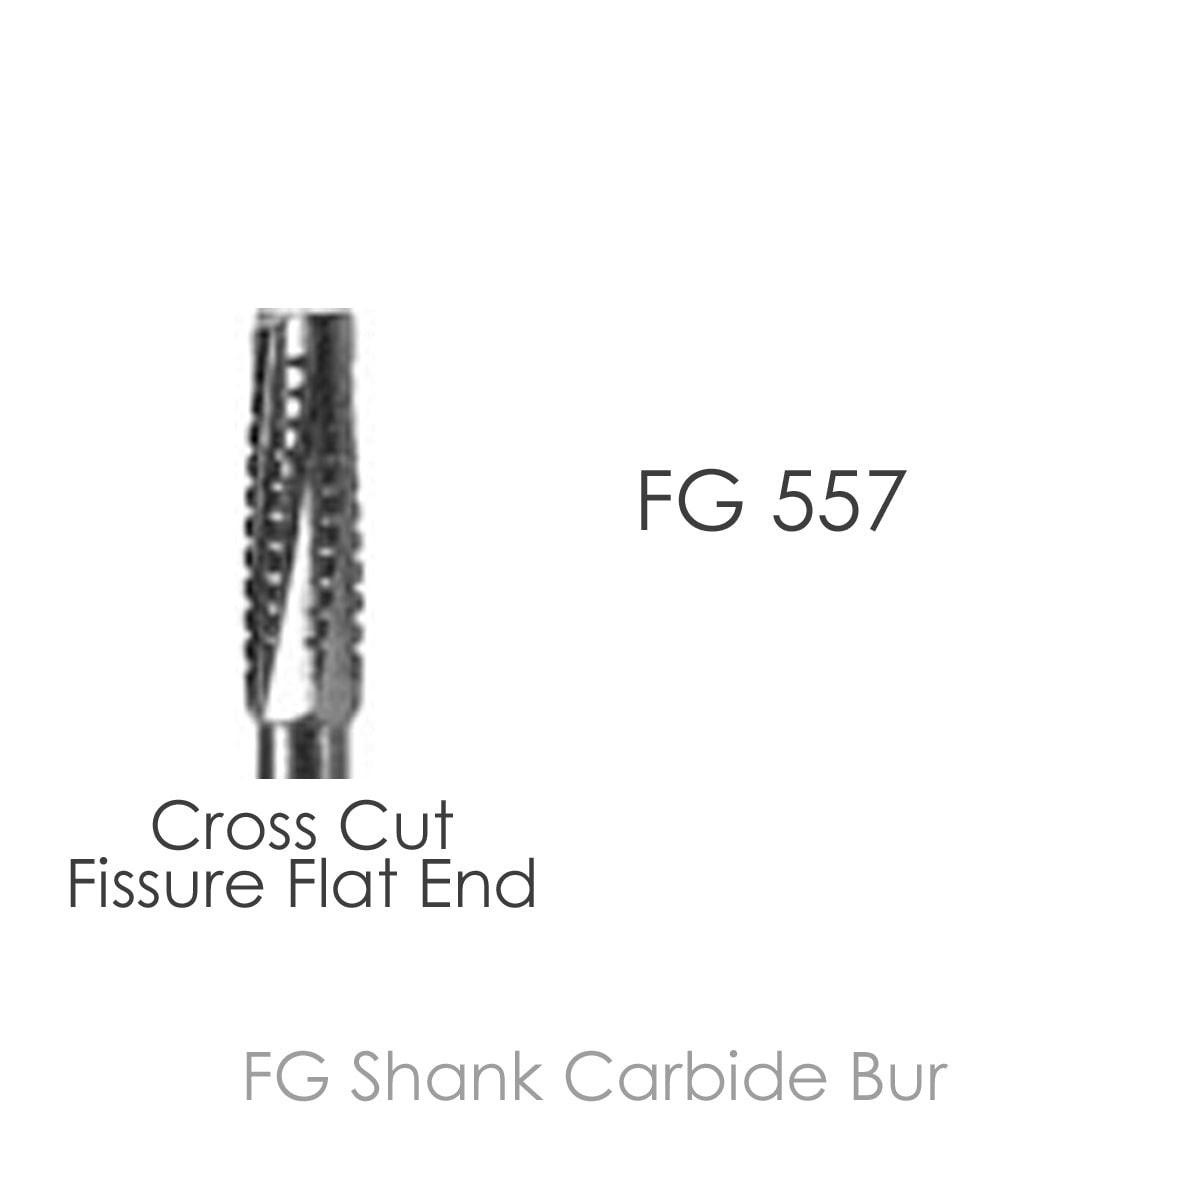 FG Shank Carbide Bur, FG 557, Cross Cut Fissure Flat End, 10pcs/Pack.